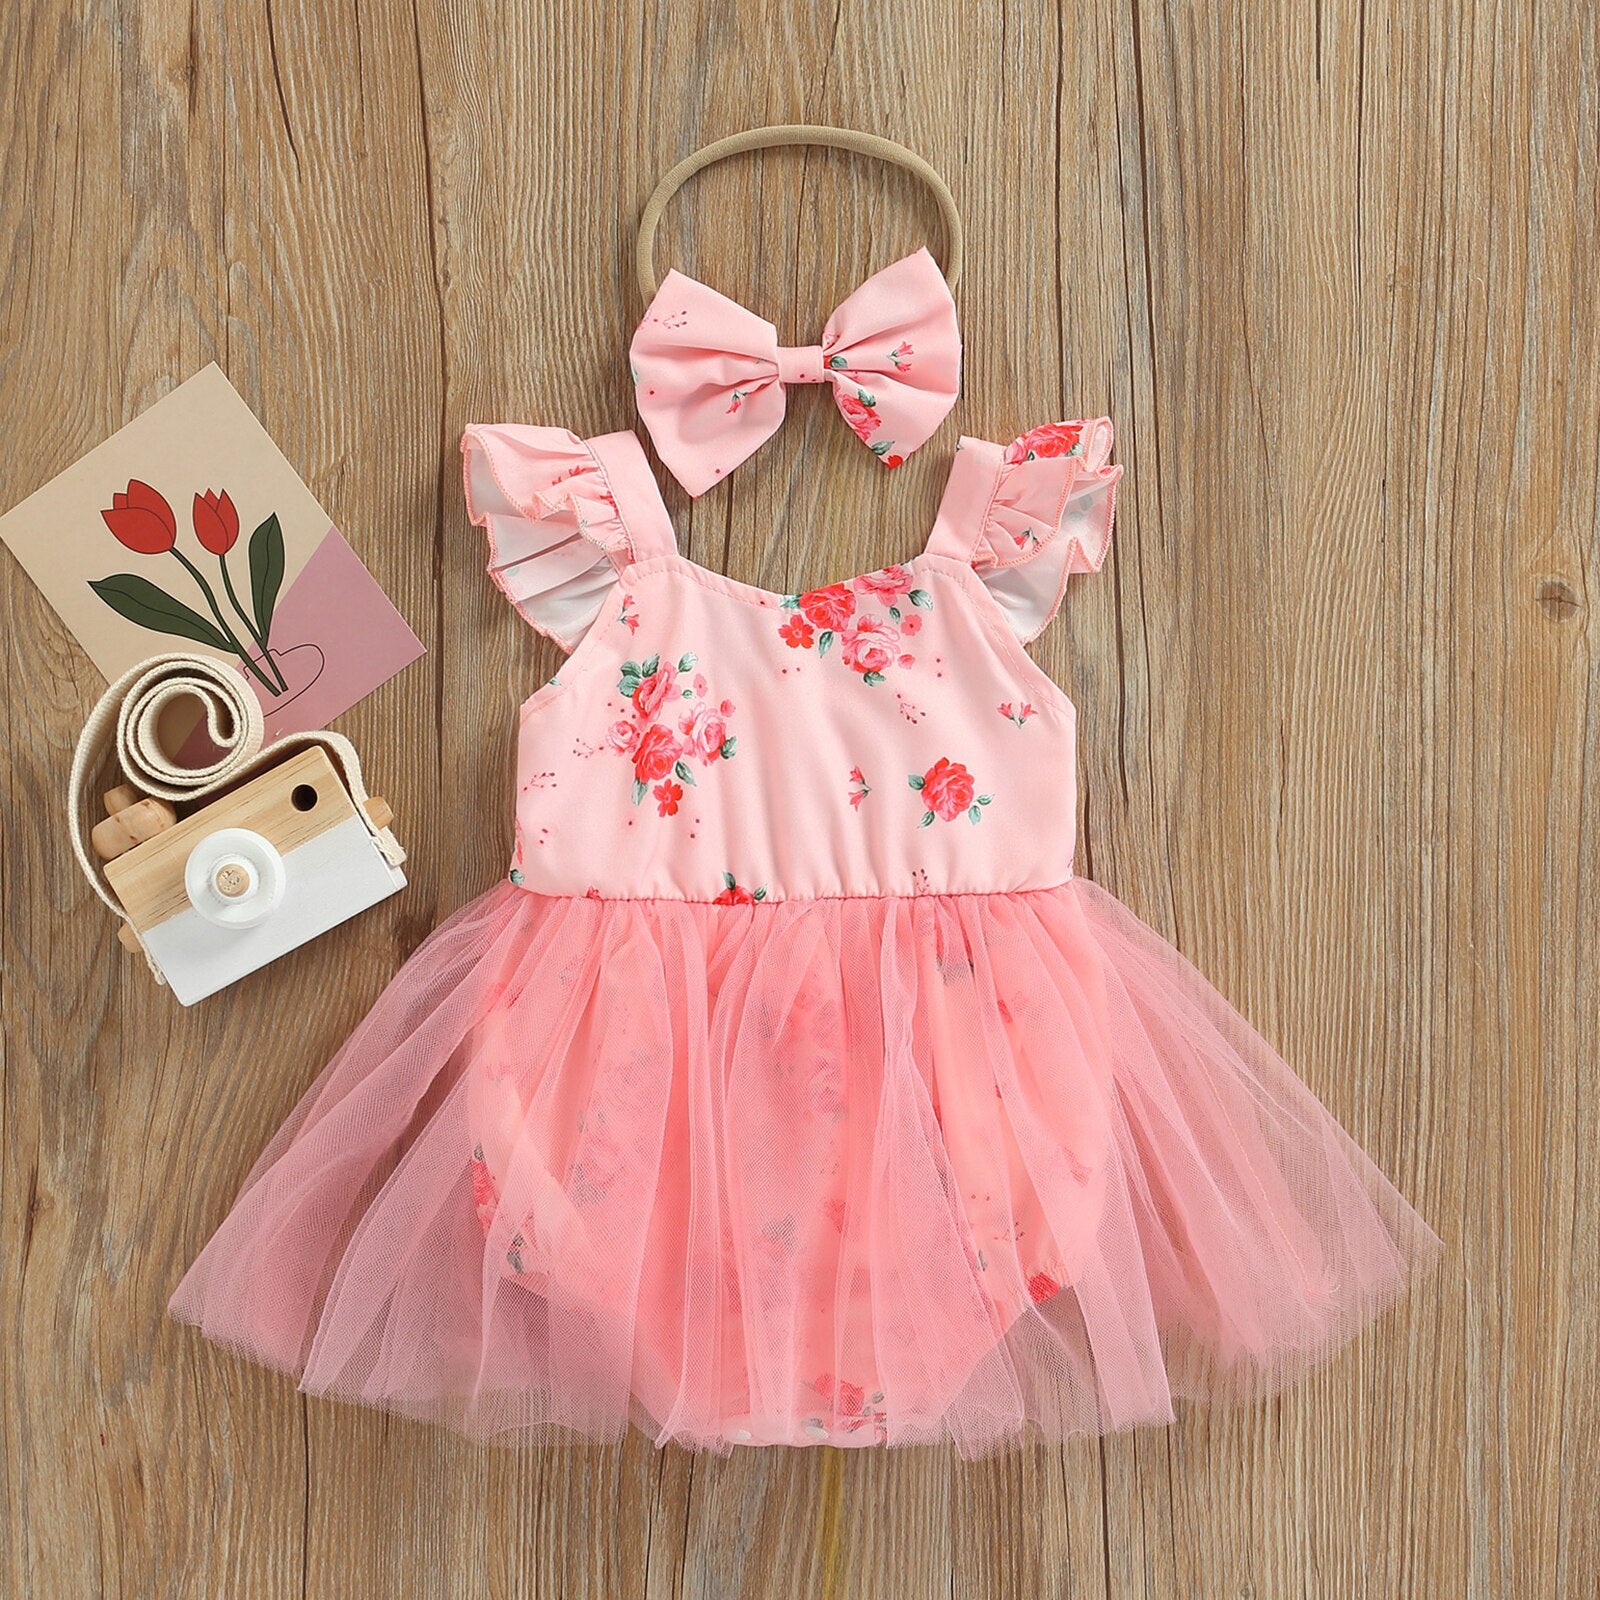 Vestido Infantil Flores e Tule + Tiara vestido Loja Click Certo Rosa 0-6 meses 39cm 